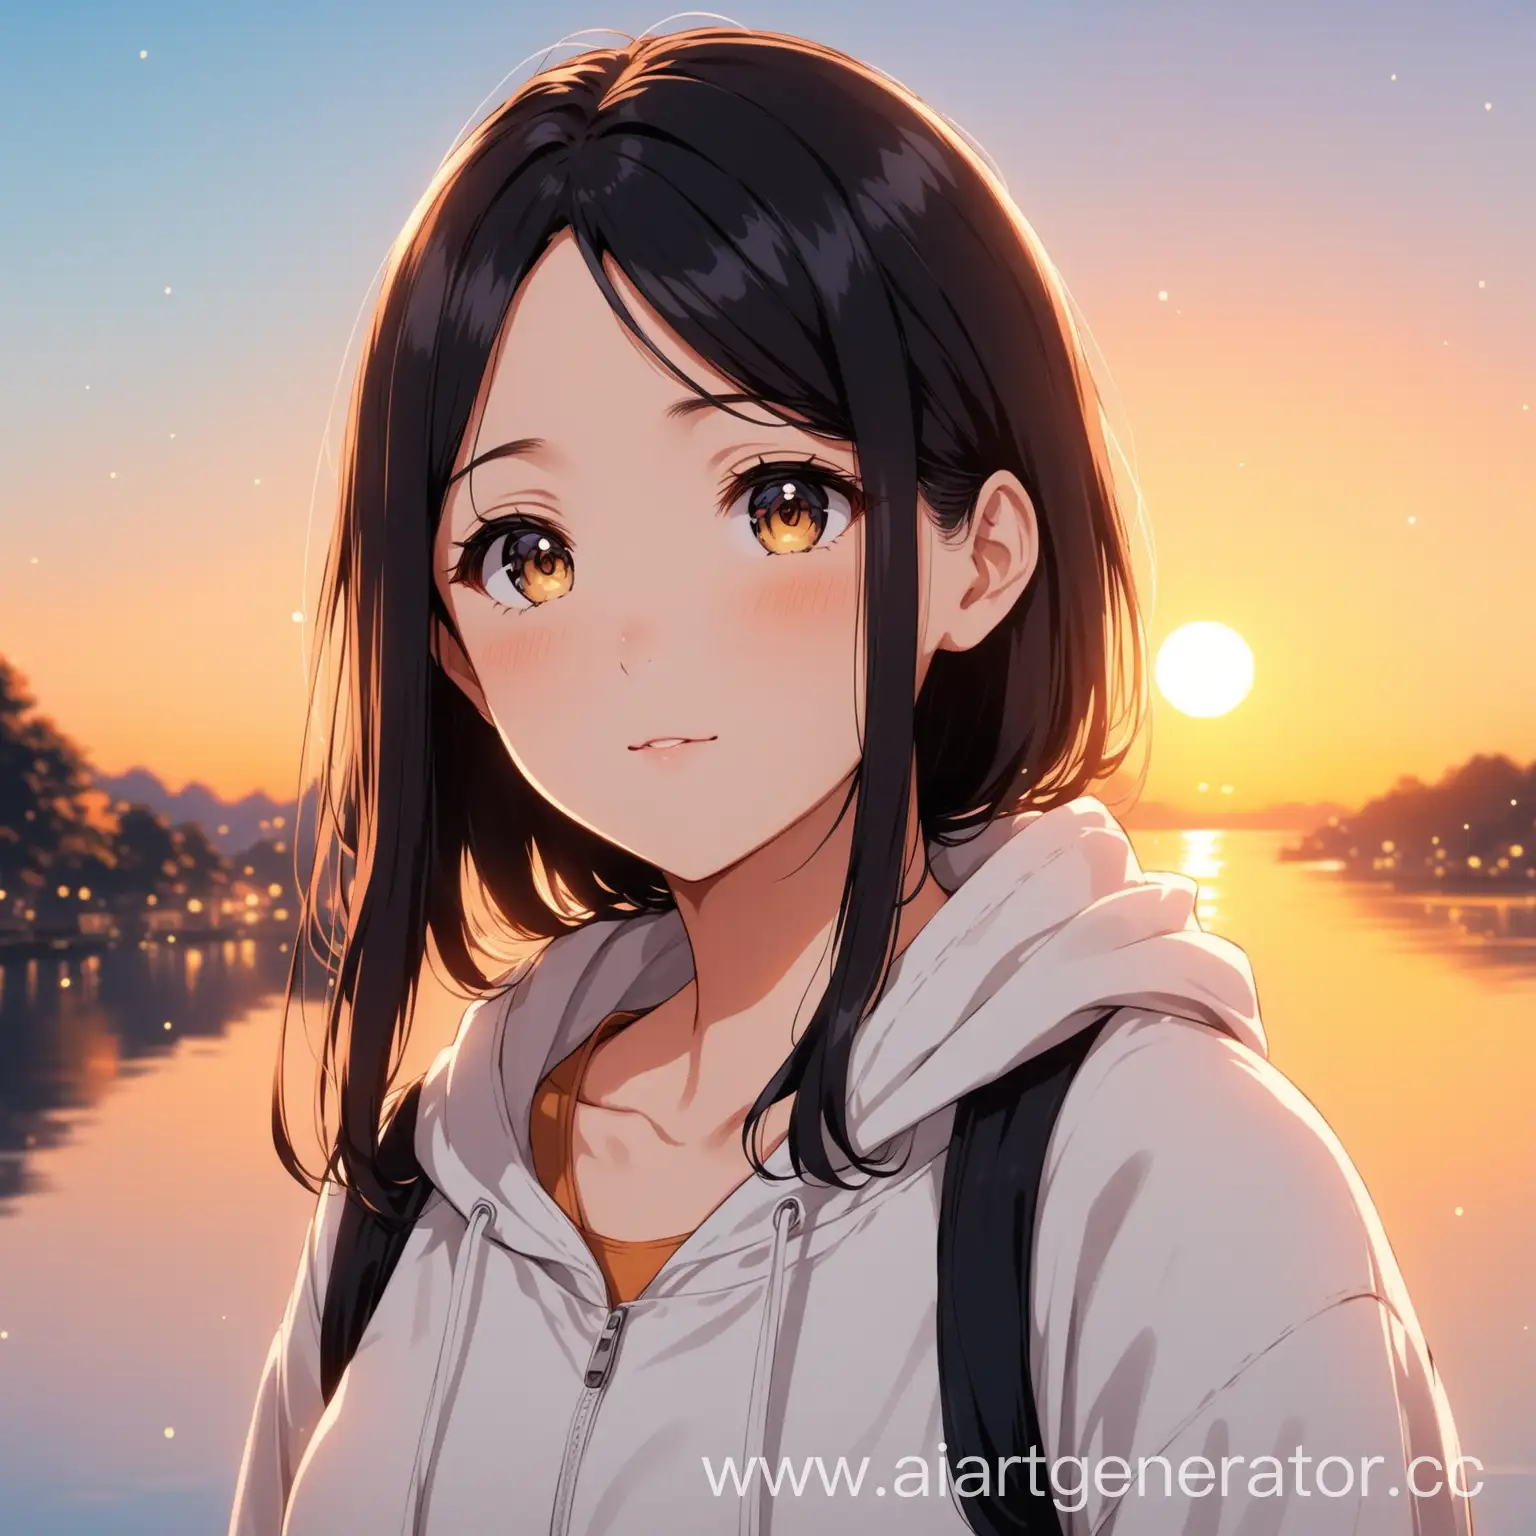 Beautiful-Anime-Girl-in-Everyday-Life-4K-Digital-Artwork